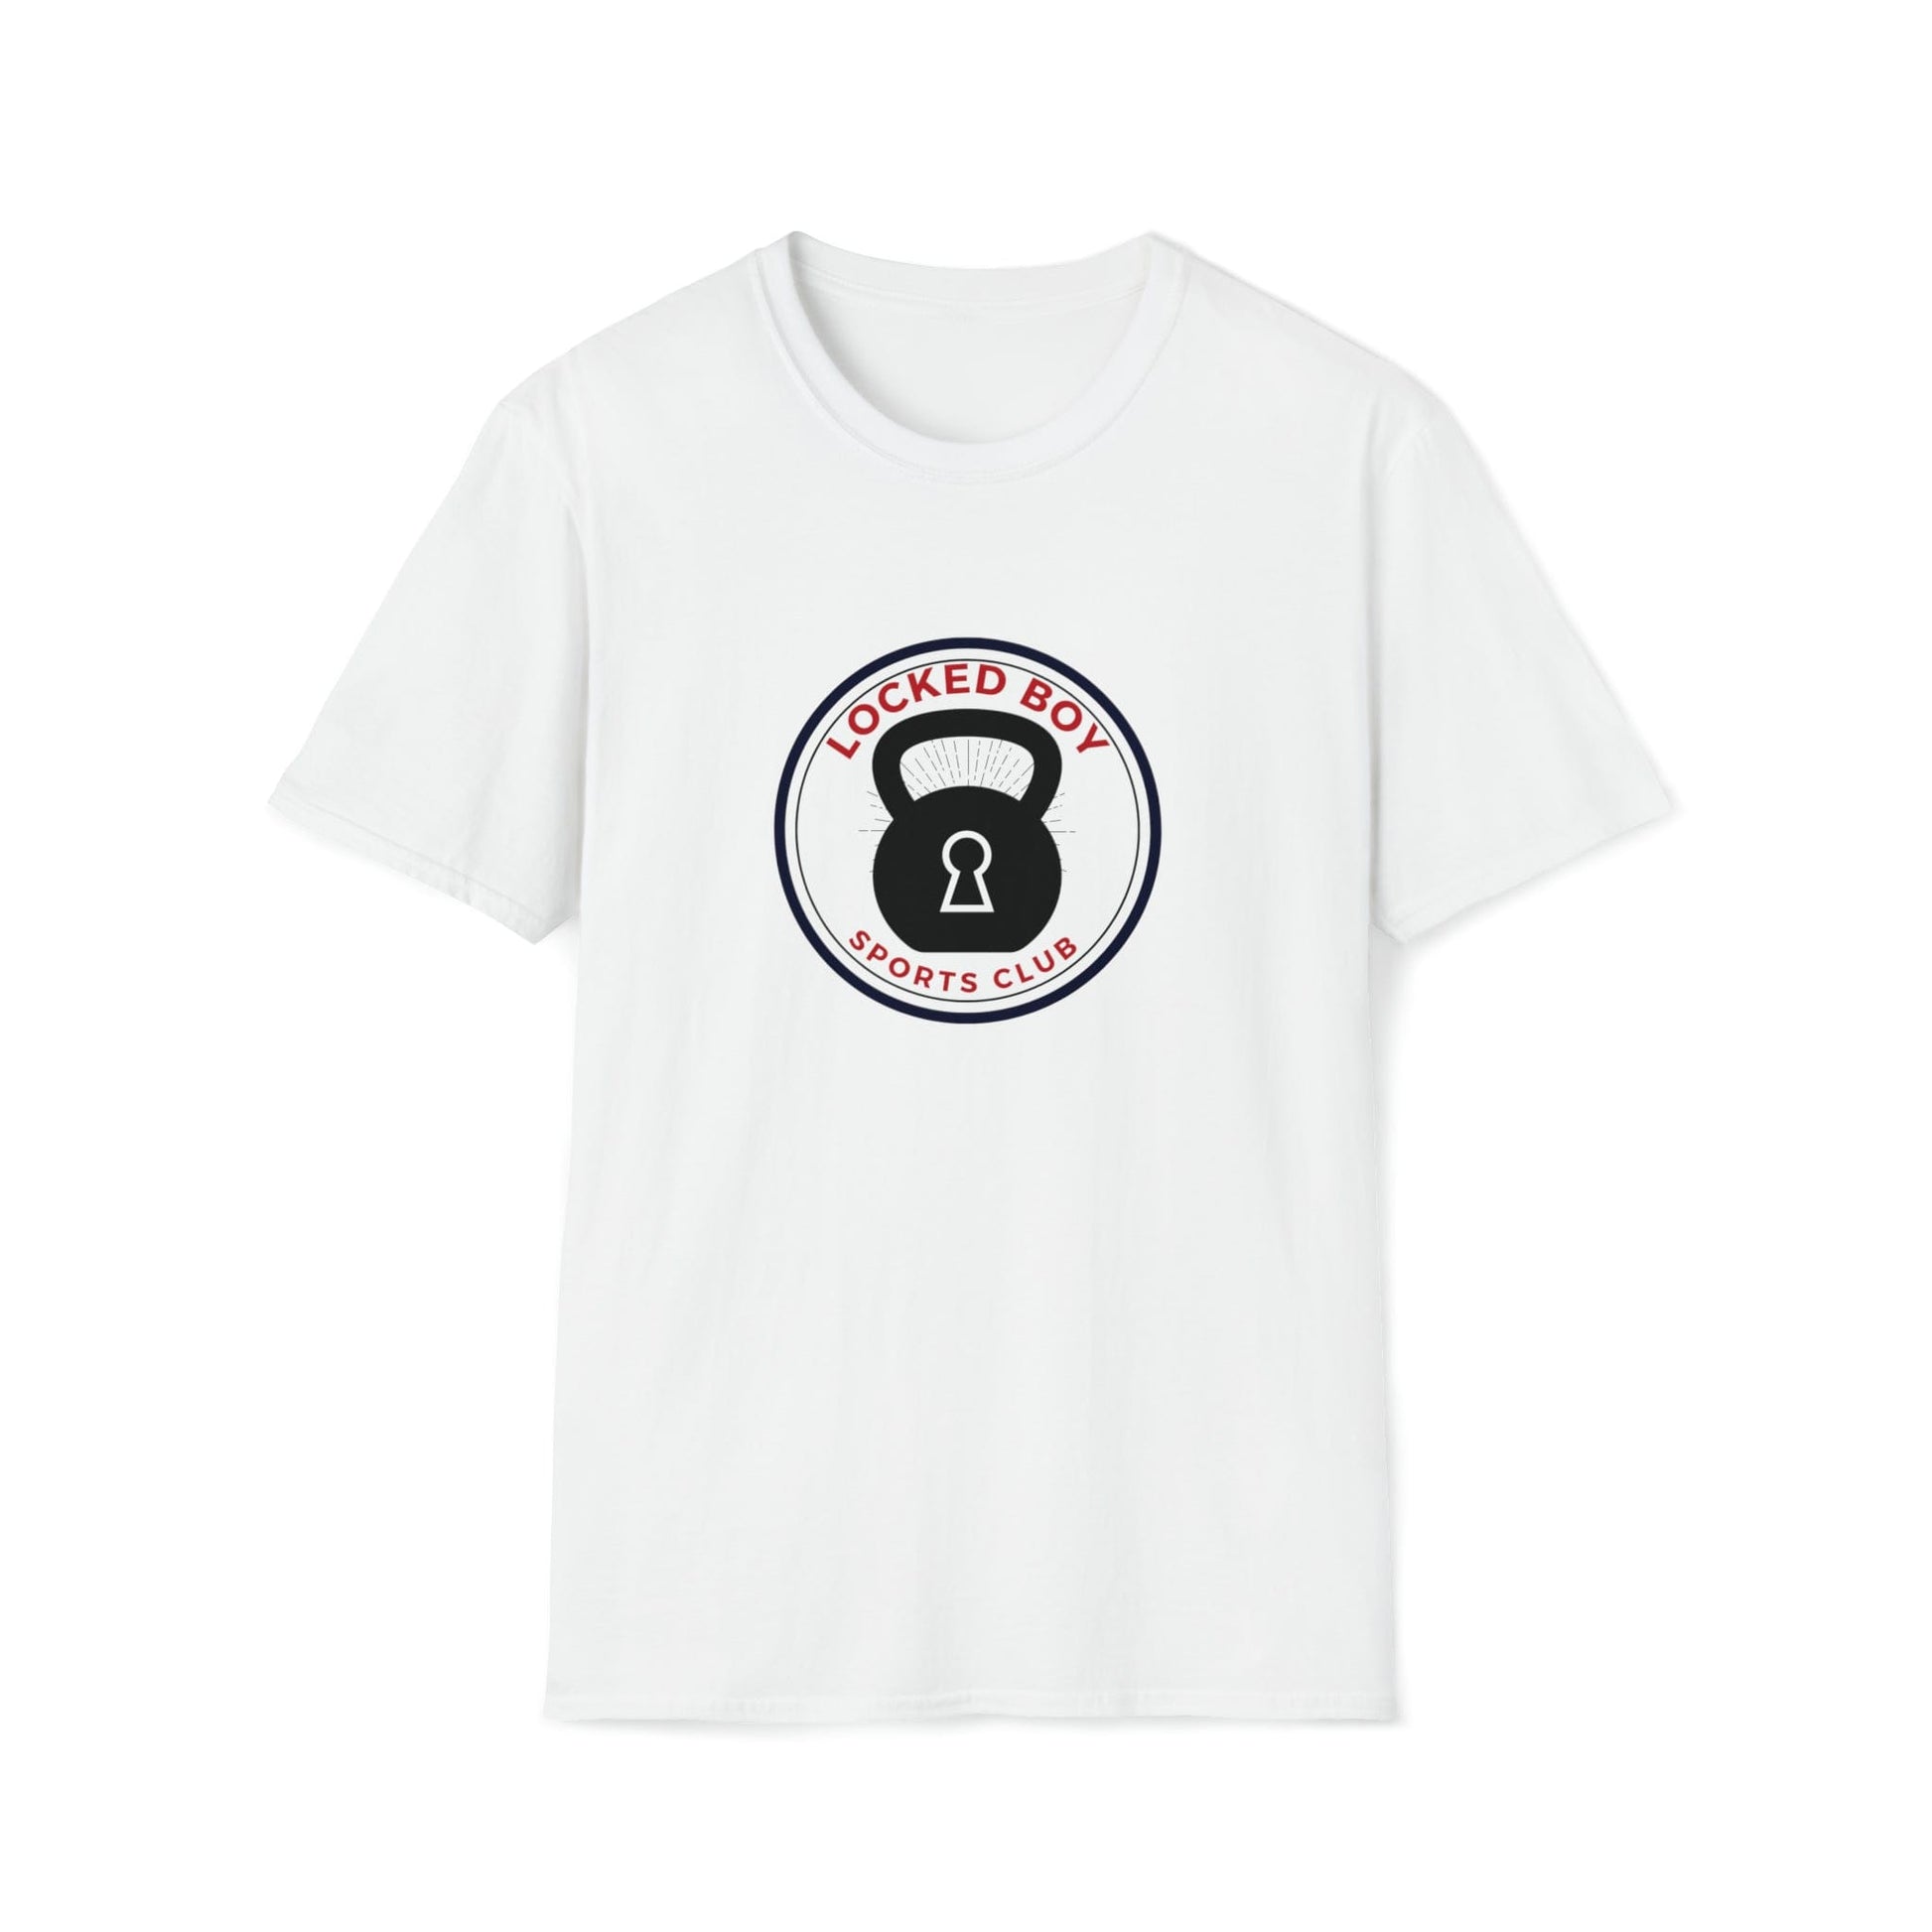 T-Shirt White / S LockedBoy Sports Club - Chastity Tshirt Kettlebell LEATHERDADDY BATOR